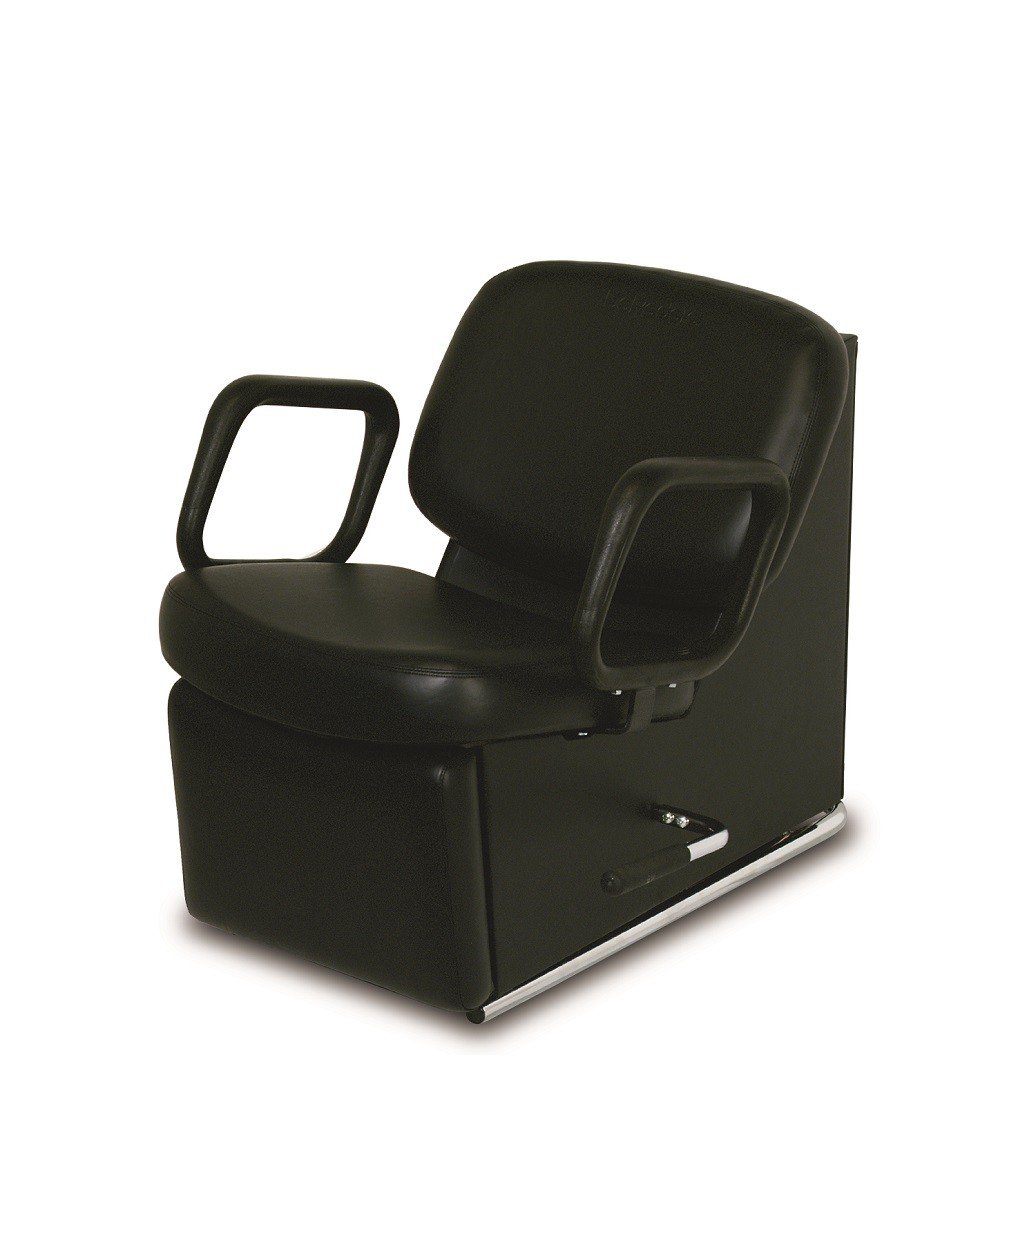 Belvedere SR-24D Siesta Shampoo Chair